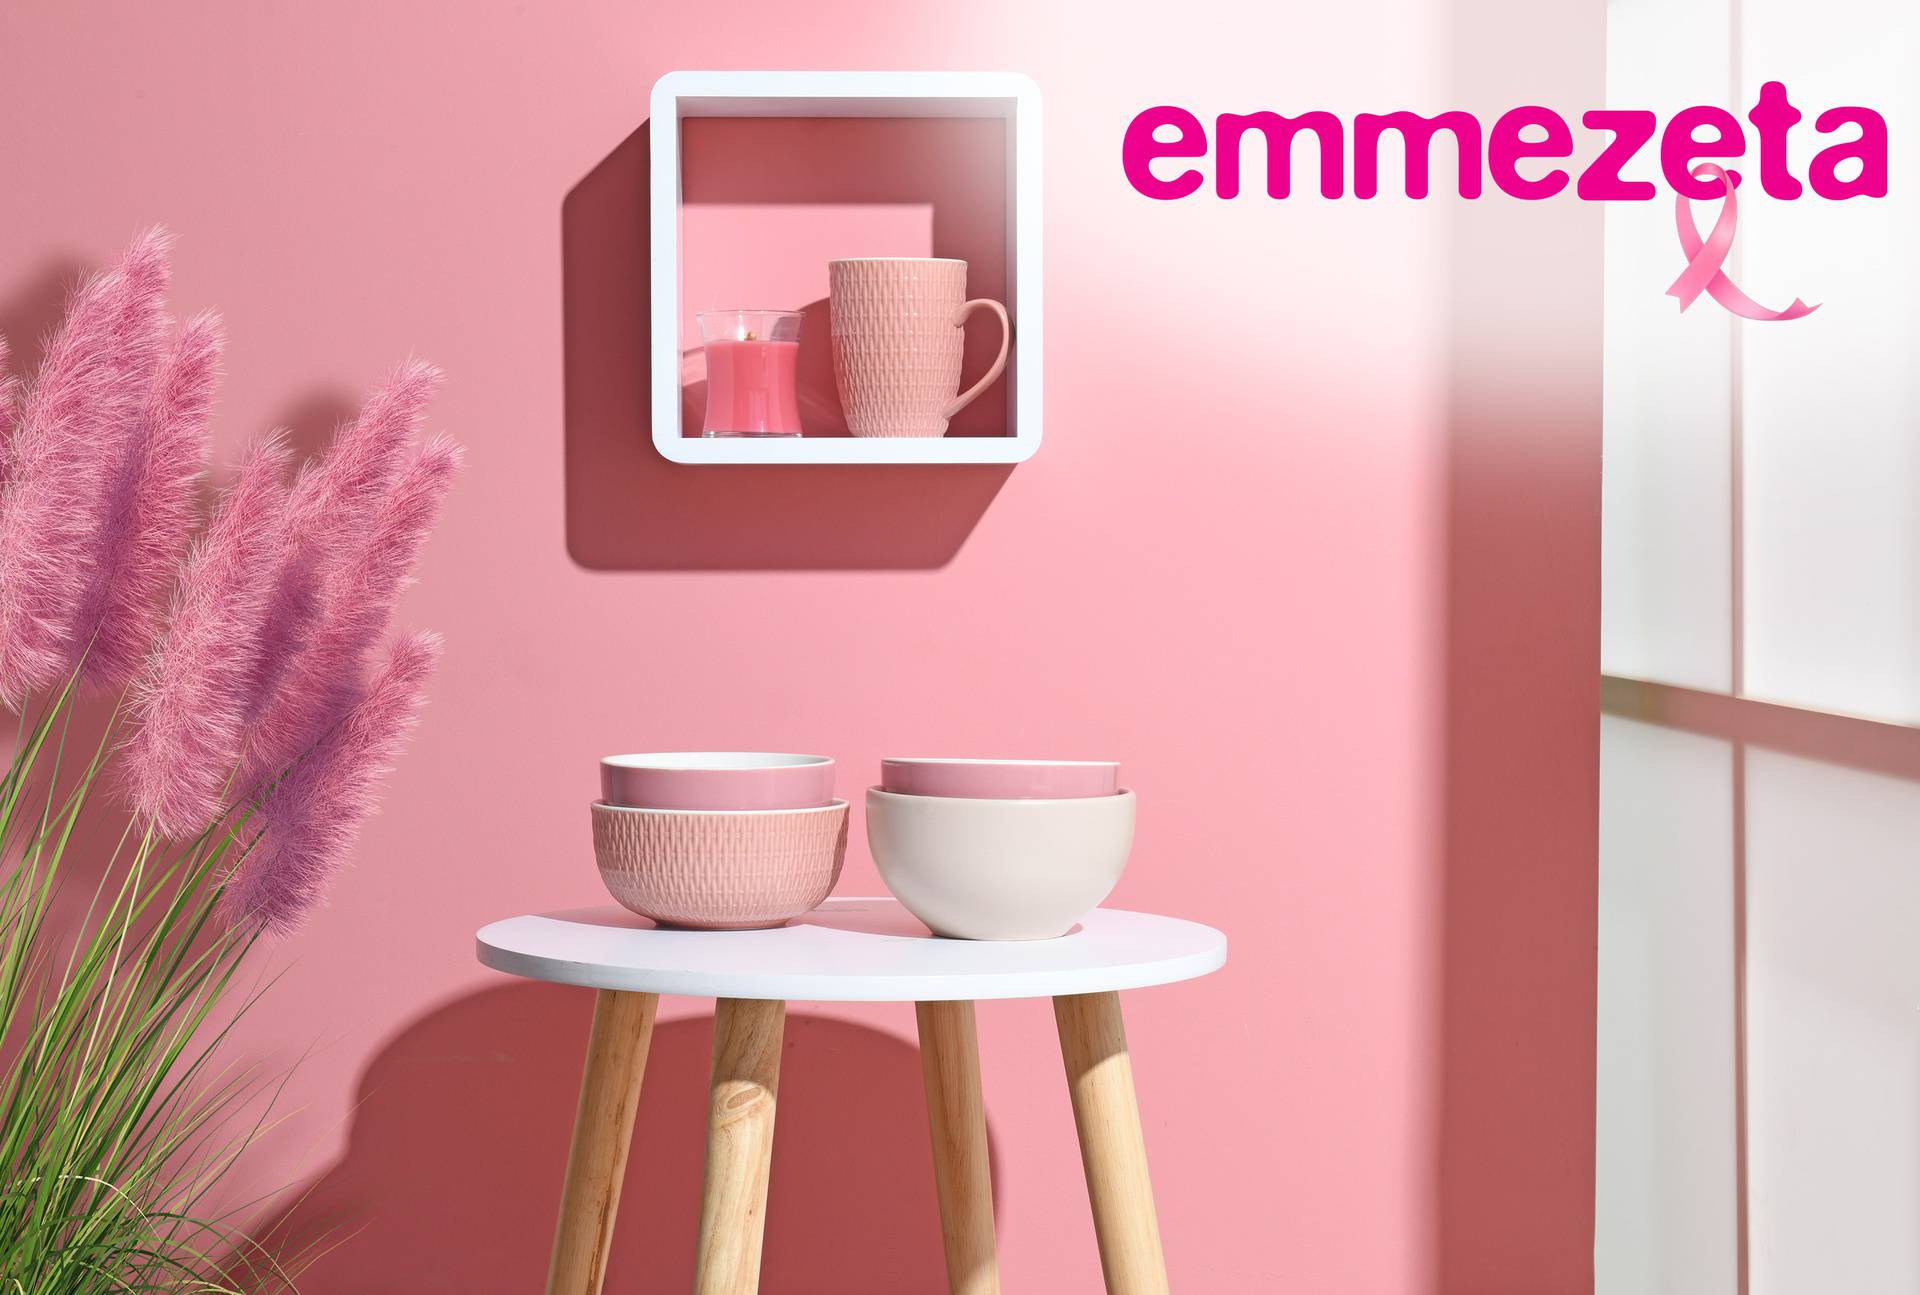 Emmezeta podržava borbu protiv raka dojke i donira!